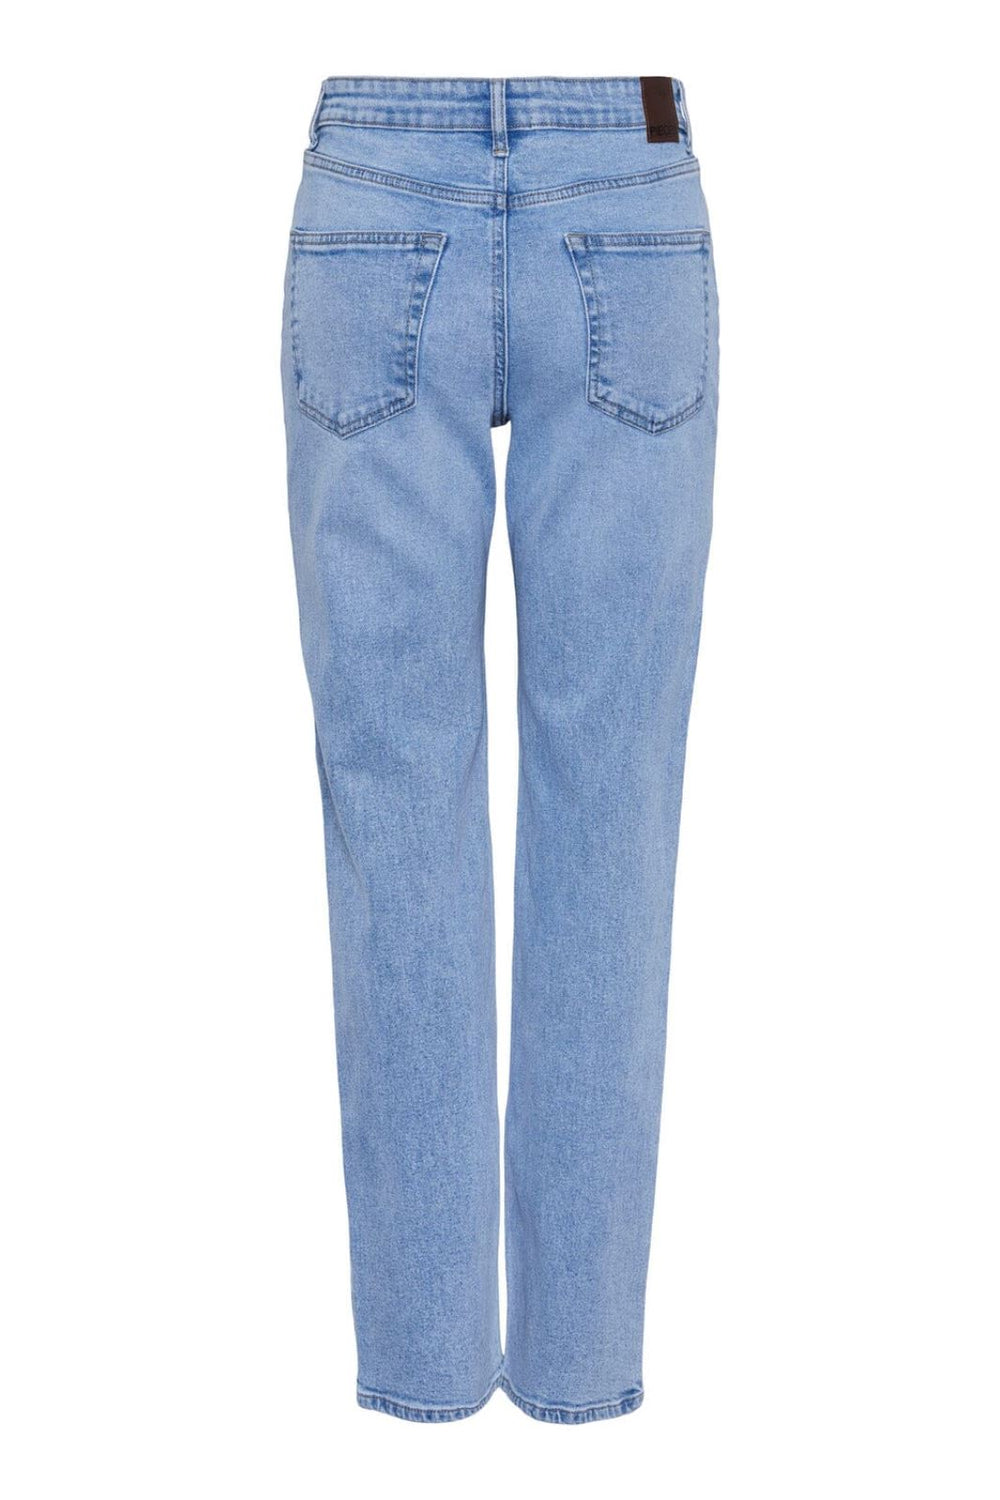 Pieces - Pckelly Straight Jeans Lb302 - 4438668 Light Blue Denim Jeans 